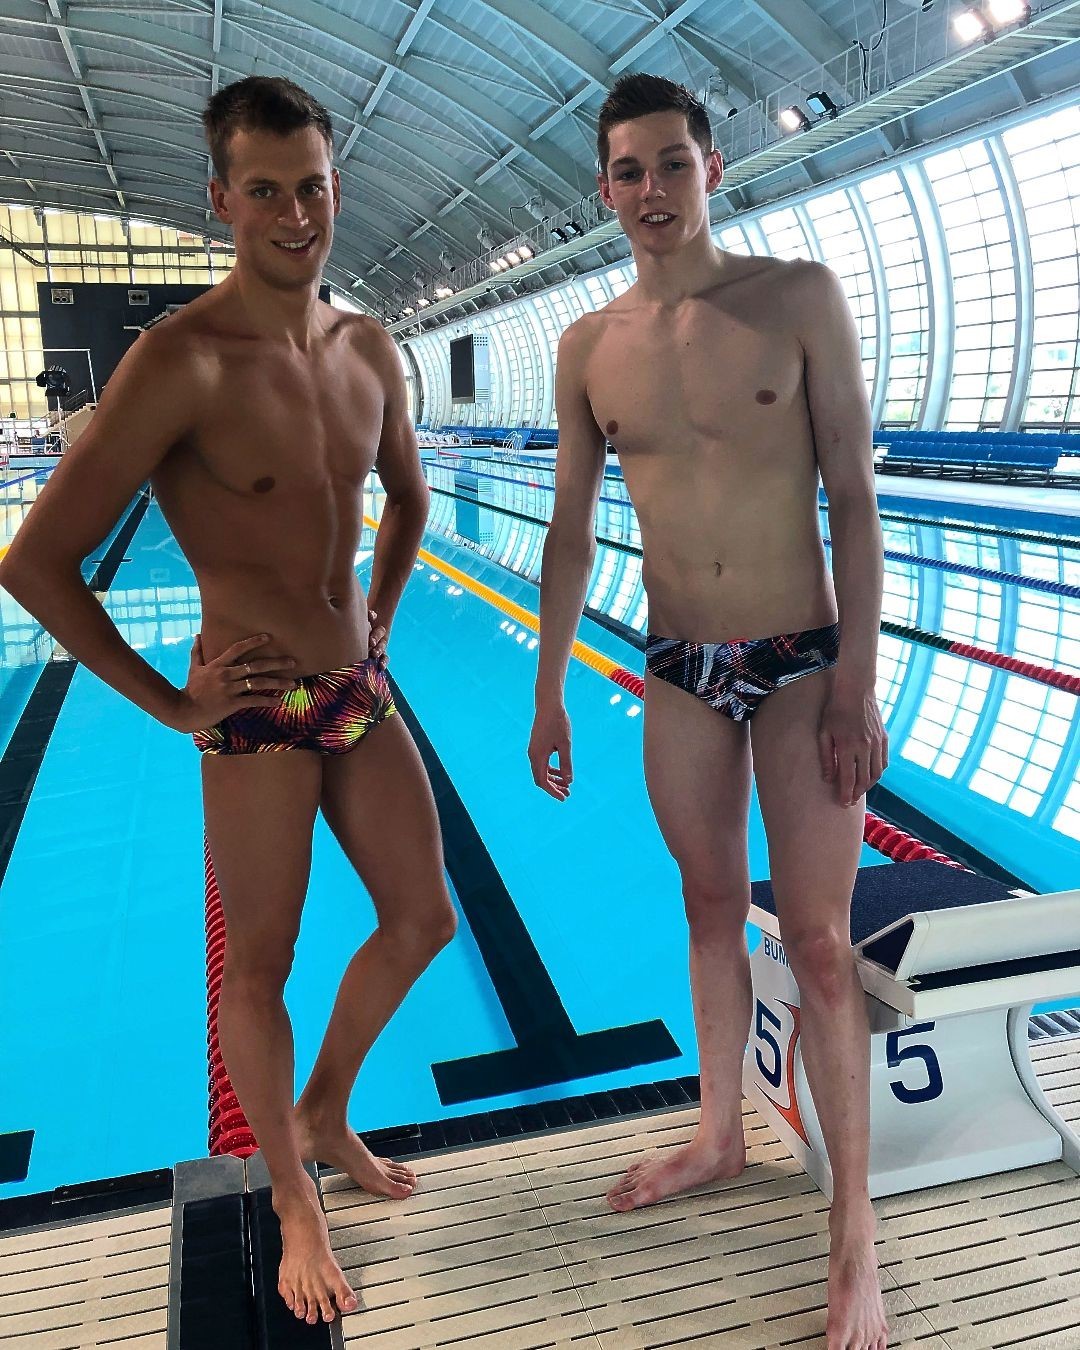 Speedo UK - Team Speedo athletes @misha_romanchuk & @dunks_scott in our newest training prints 🌟💥

Train hard. Look fierce 🐆

Shop now on www.speedo.com
#TeamSpeedo #Swimming #Speedo